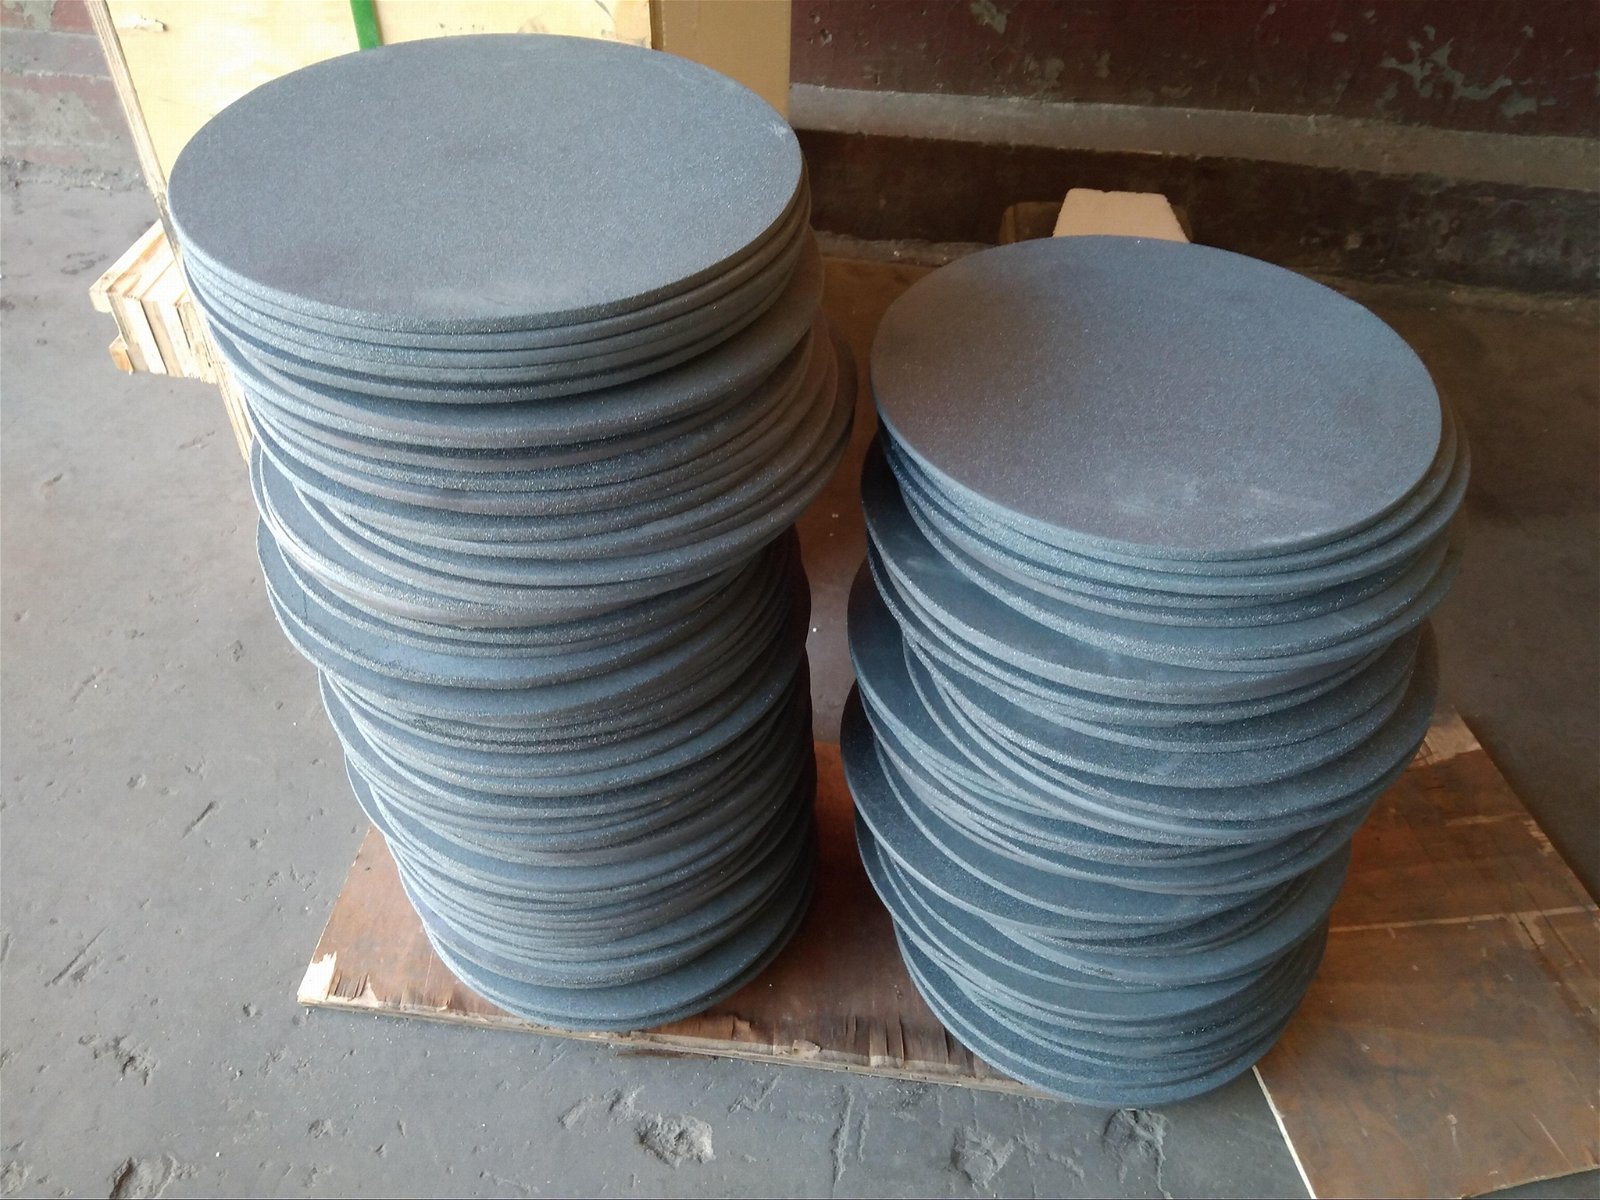 RSiC Round Plates, ReSiC shelves, recrystallized silicon carbide plates 2